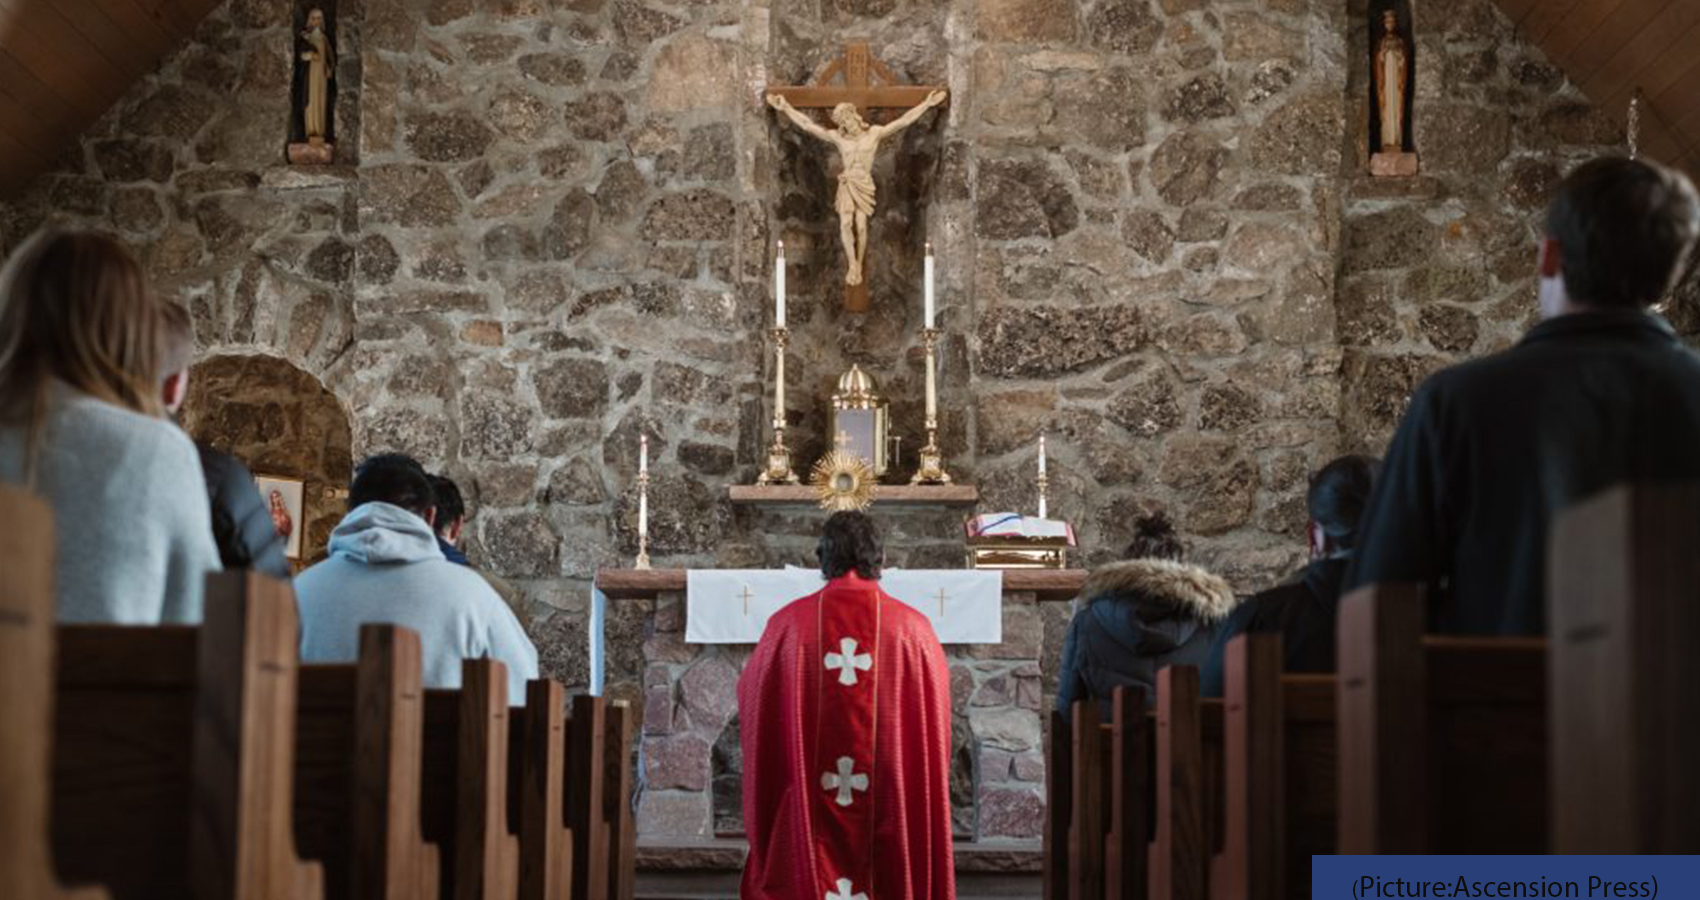 Sunday Mass: Obligation Or Opportunity?